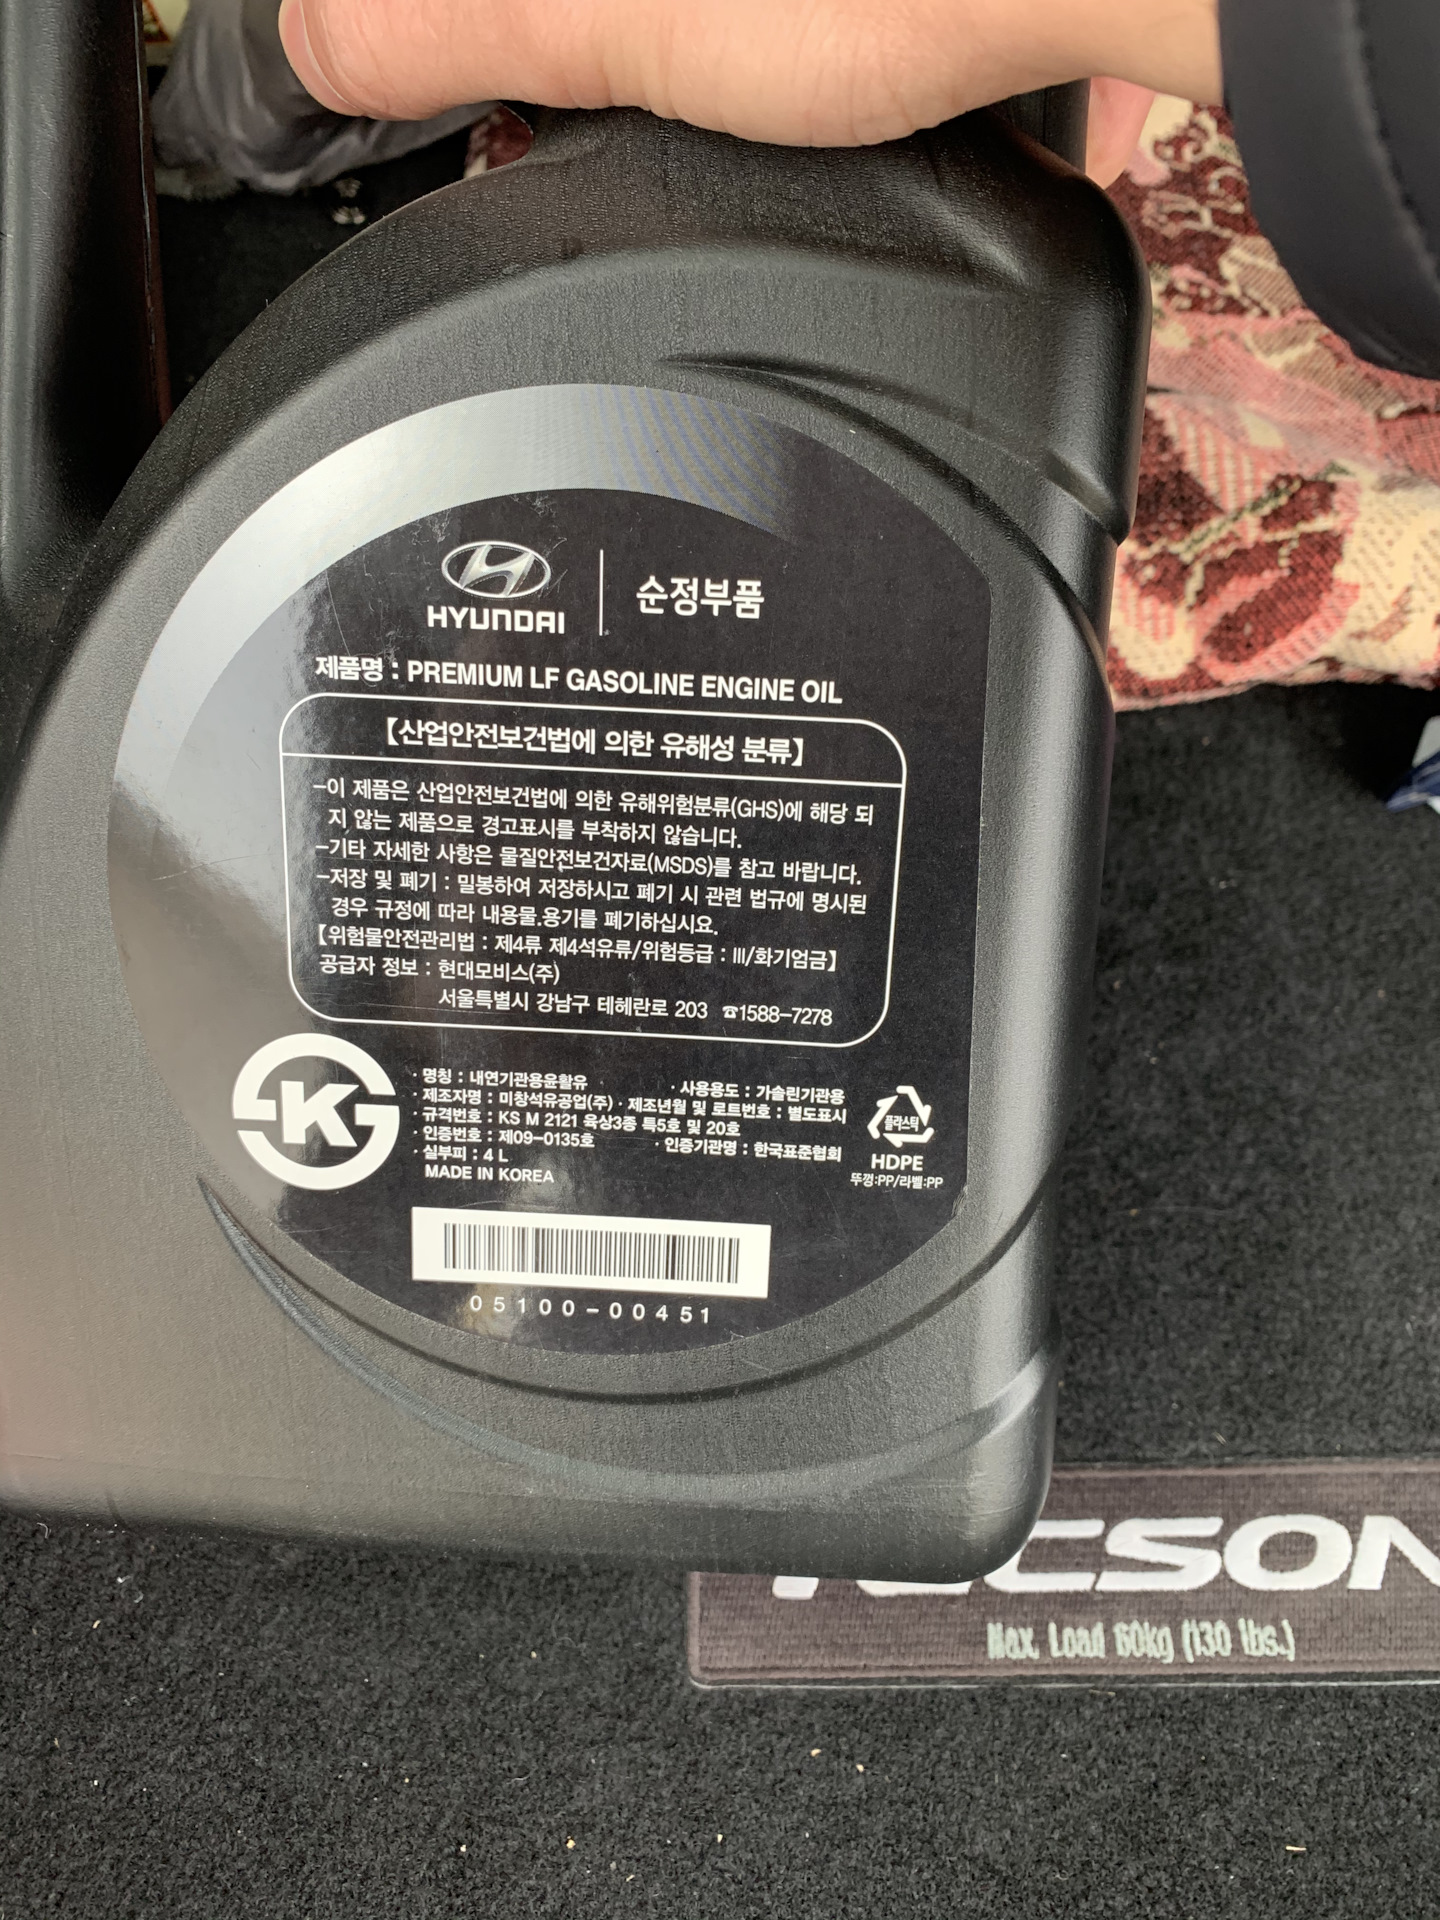 Hyundai premium lf gasoline 5w 20. Премиум ЛФ 5w20 вес канистры. Прожарка Premium LF 5-20 bmwservice.